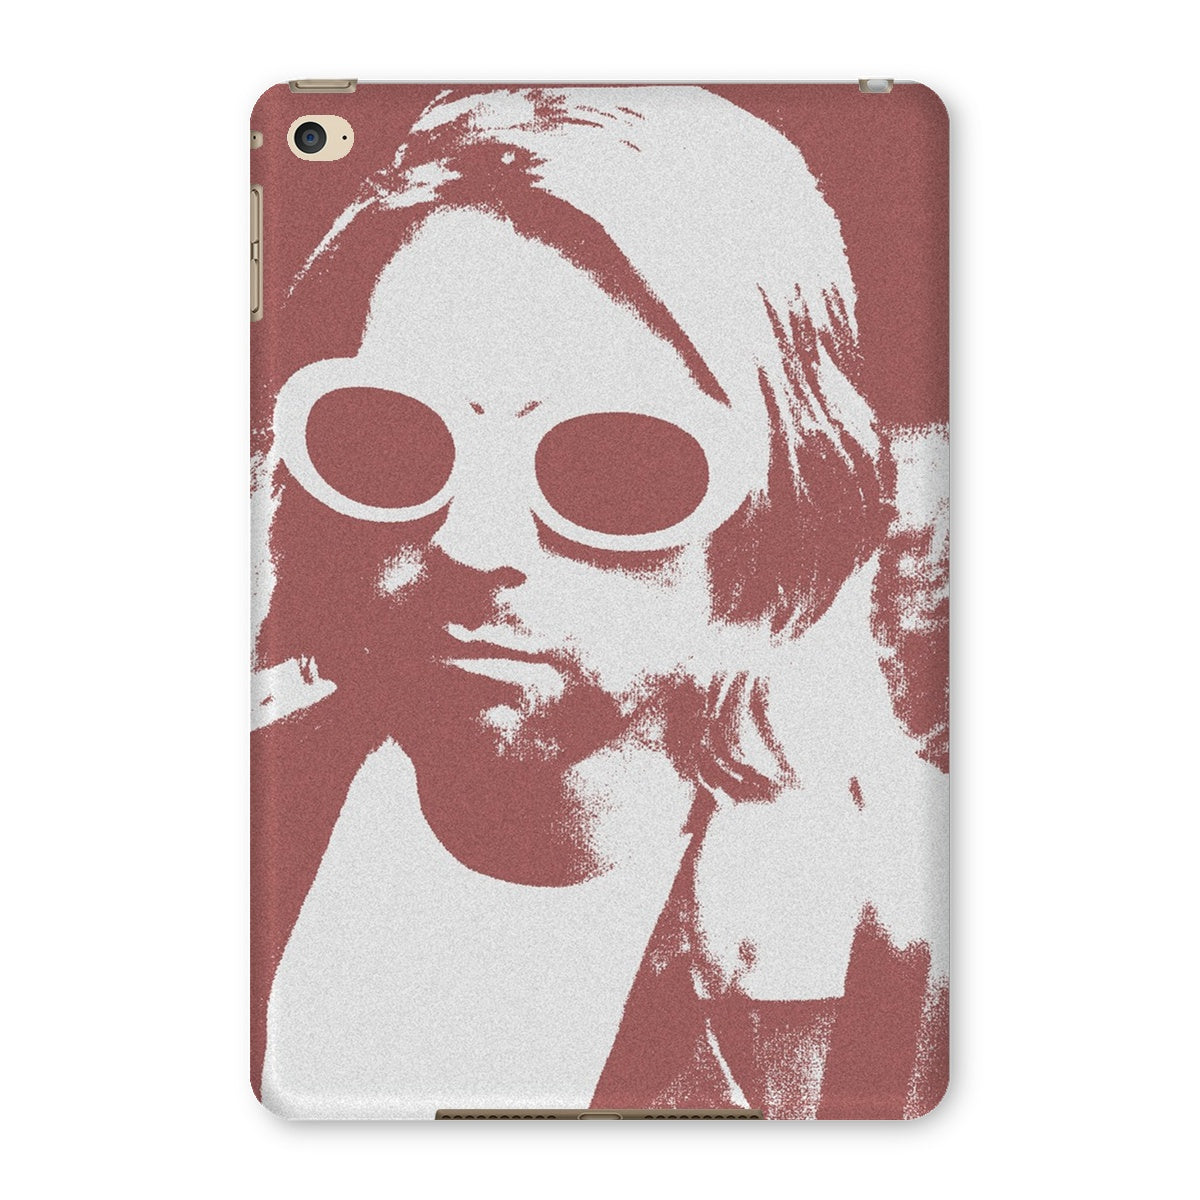 Kurt Cobain Print Tablet Cases